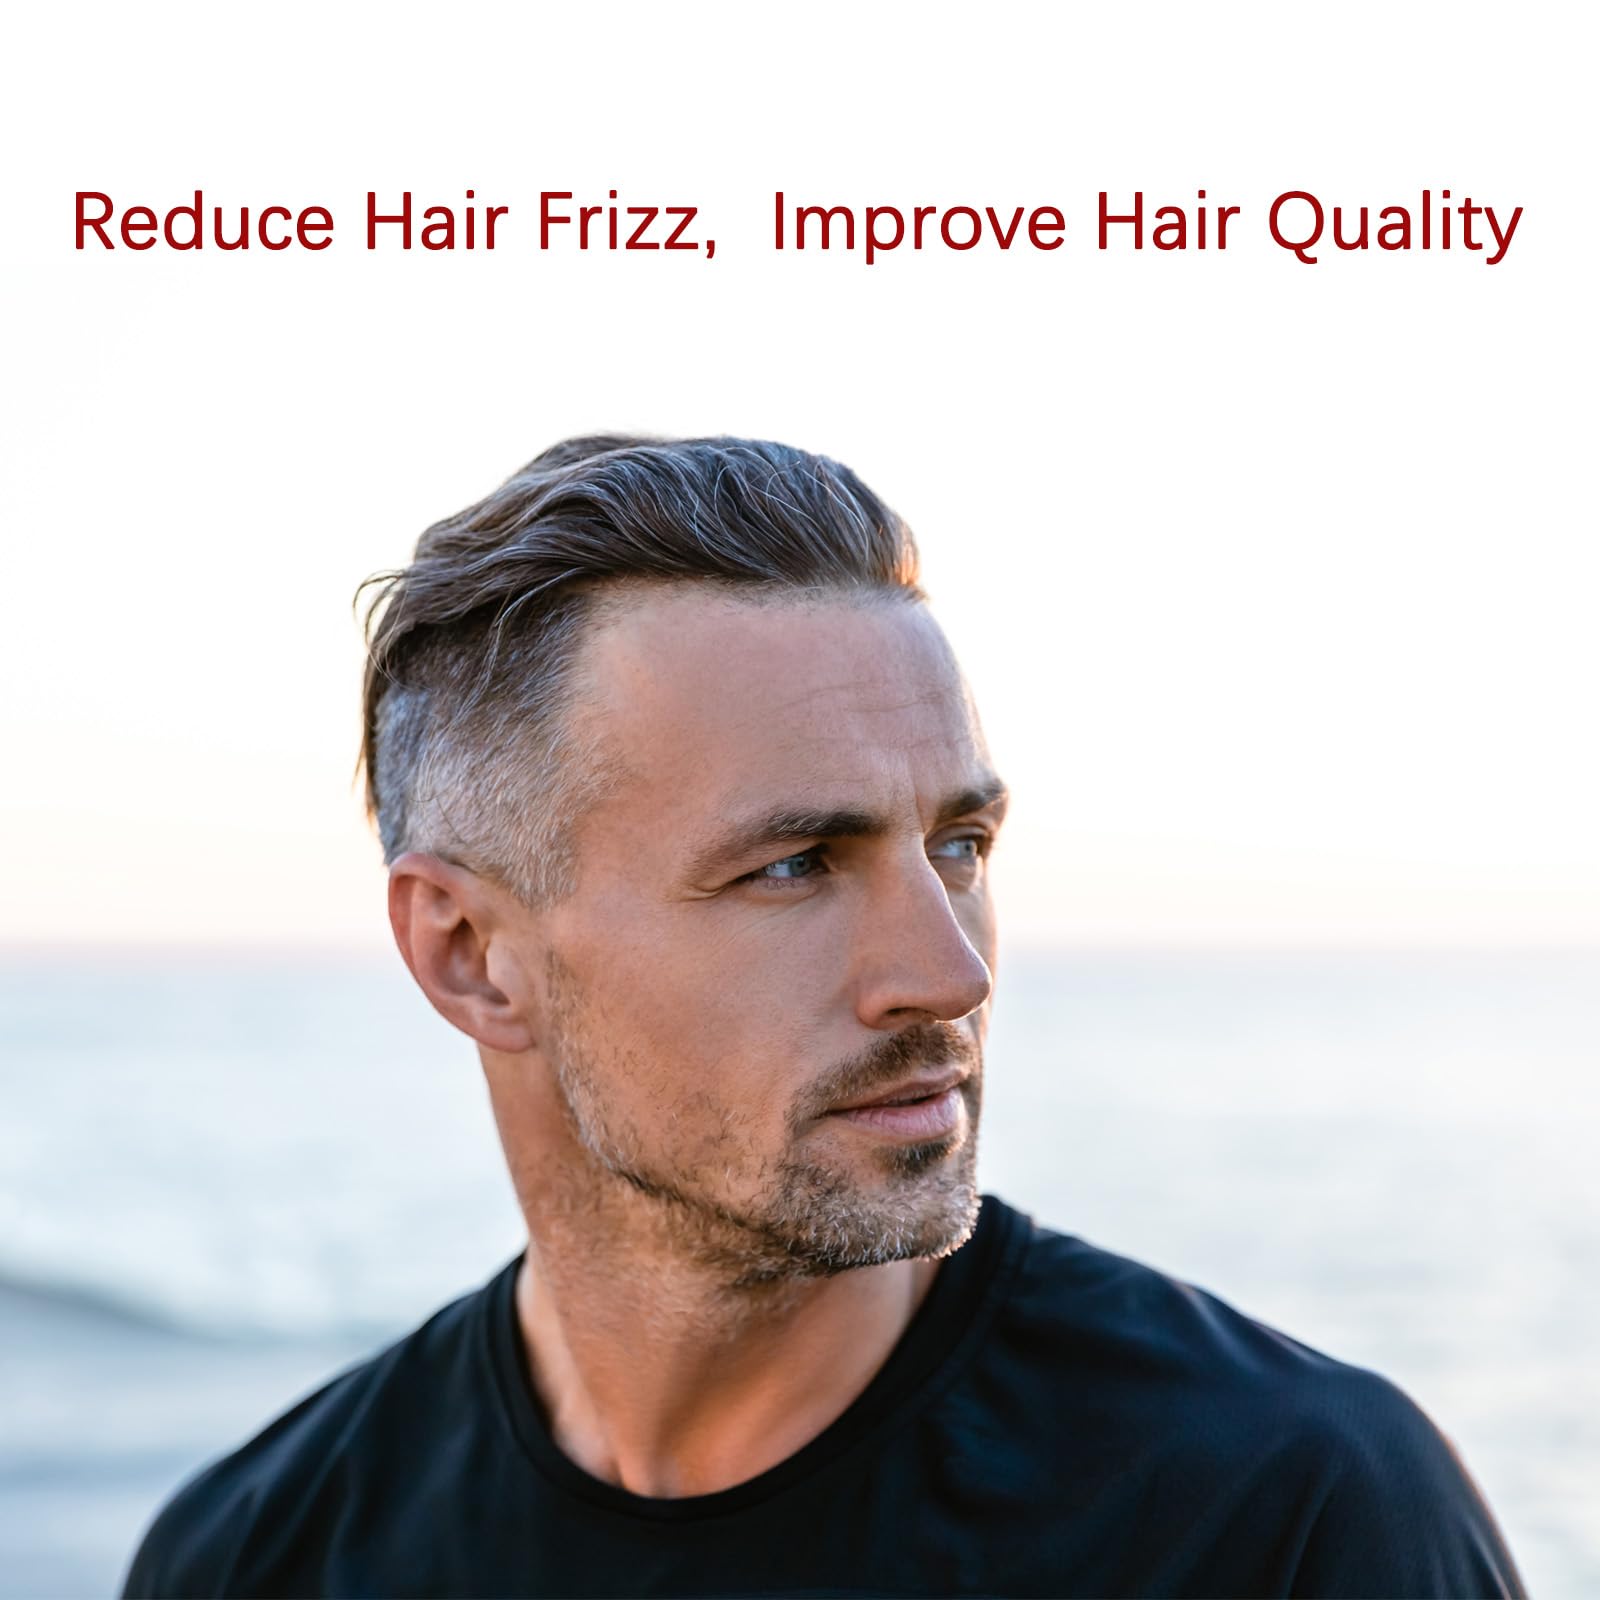 Sea Salt Spray for Hair Men and Women 5 fl oz - Dry Texturizing & Volumizing, Curl and Beach Waves Spray for Hair